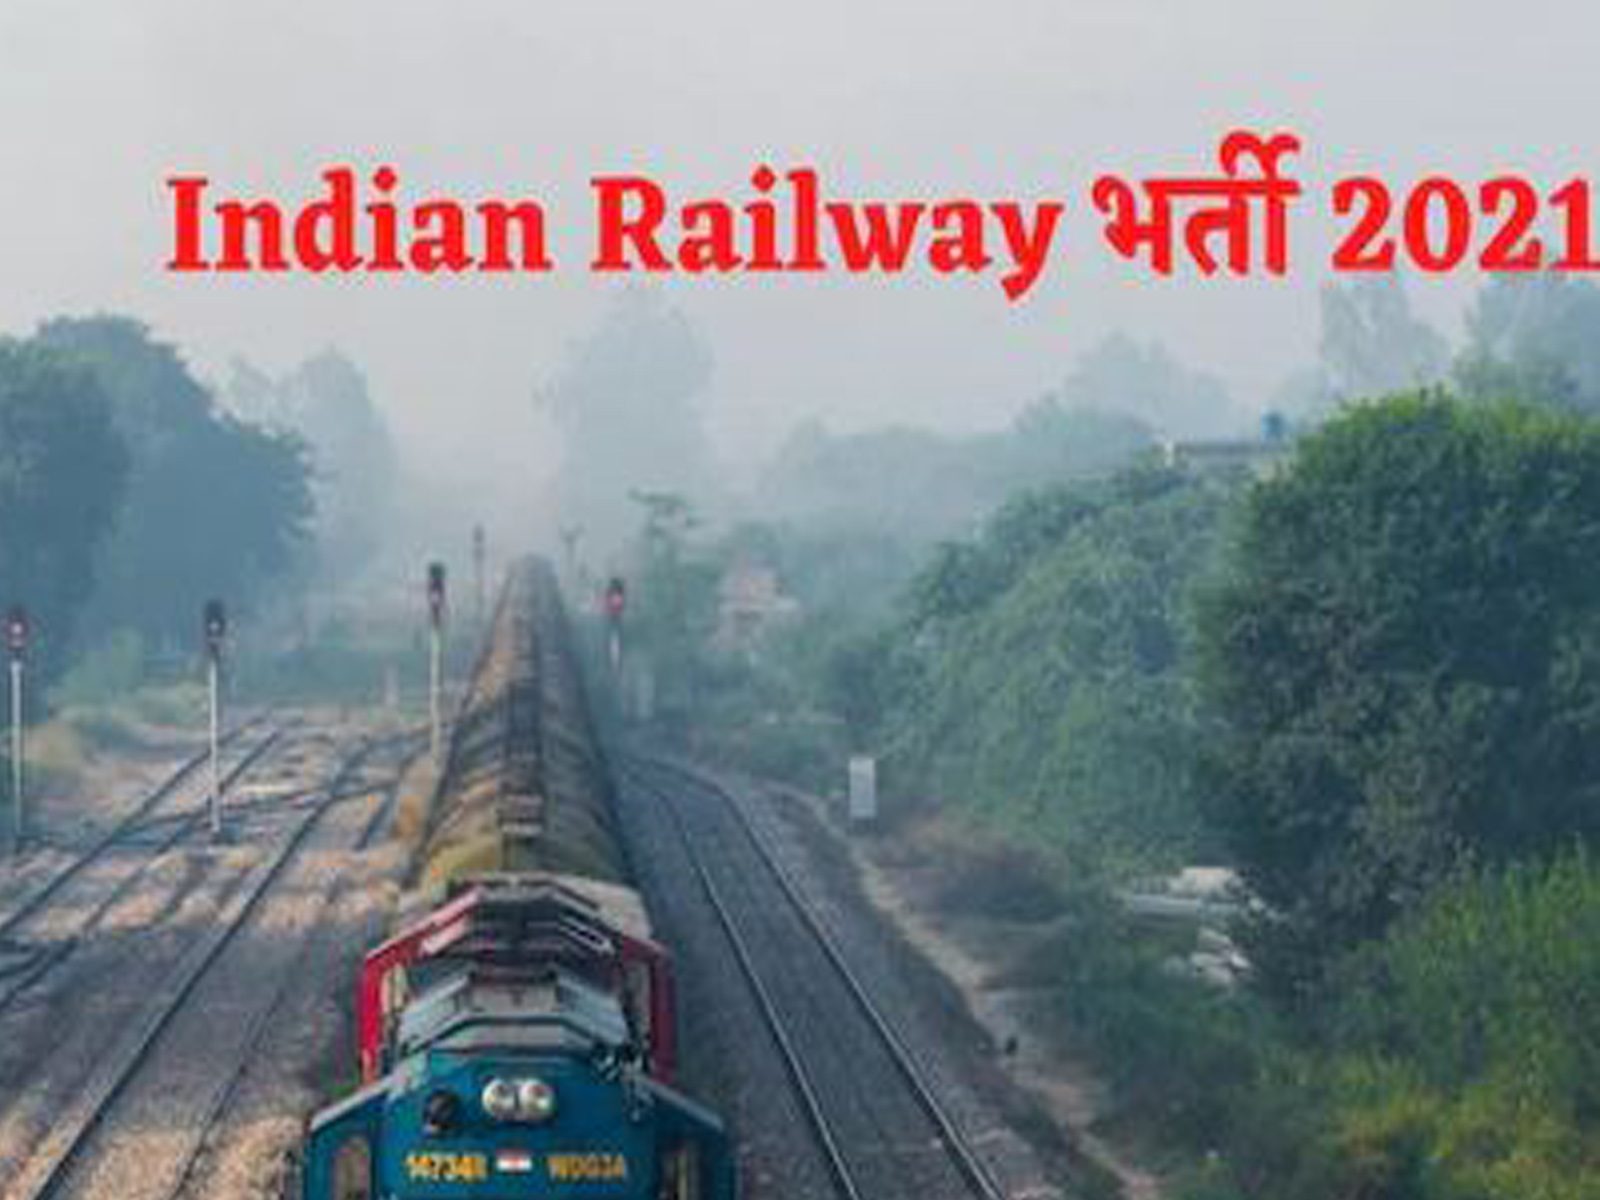 Railway Bharti 2021: ਉੱਤਰੀ ਮੱਧ ਰੇਲਵੇ (North Central Railway) ਨੇ ਗਰੁੱਪ 'ਸੀ' ਦੀਆਂ ਅਸਾਮੀਆਂ 'ਤੇ ਭਰਤੀ ਕੀਤੀ ਹੈ। ਇਨ੍ਹਾਂ ਅਸਾਮੀਆਂ (Railway group c bharti 2021) ਲਈ ਅਰਜ਼ੀ ਦੀ ਪ੍ਰਕਿਰਿਆ 26 ਨਵੰਬਰ 2021 ਤੋਂ ਚੱਲ ਰਹੀ ਹੈ ਅਤੇ ਅਰਜ਼ੀ ਦੀ ਆਖਰੀ ਮਿਤੀ ਵਿੱਚ 5 ਹੋਰ ਦਿਨ ਬਾਕੀ ਹਨ।